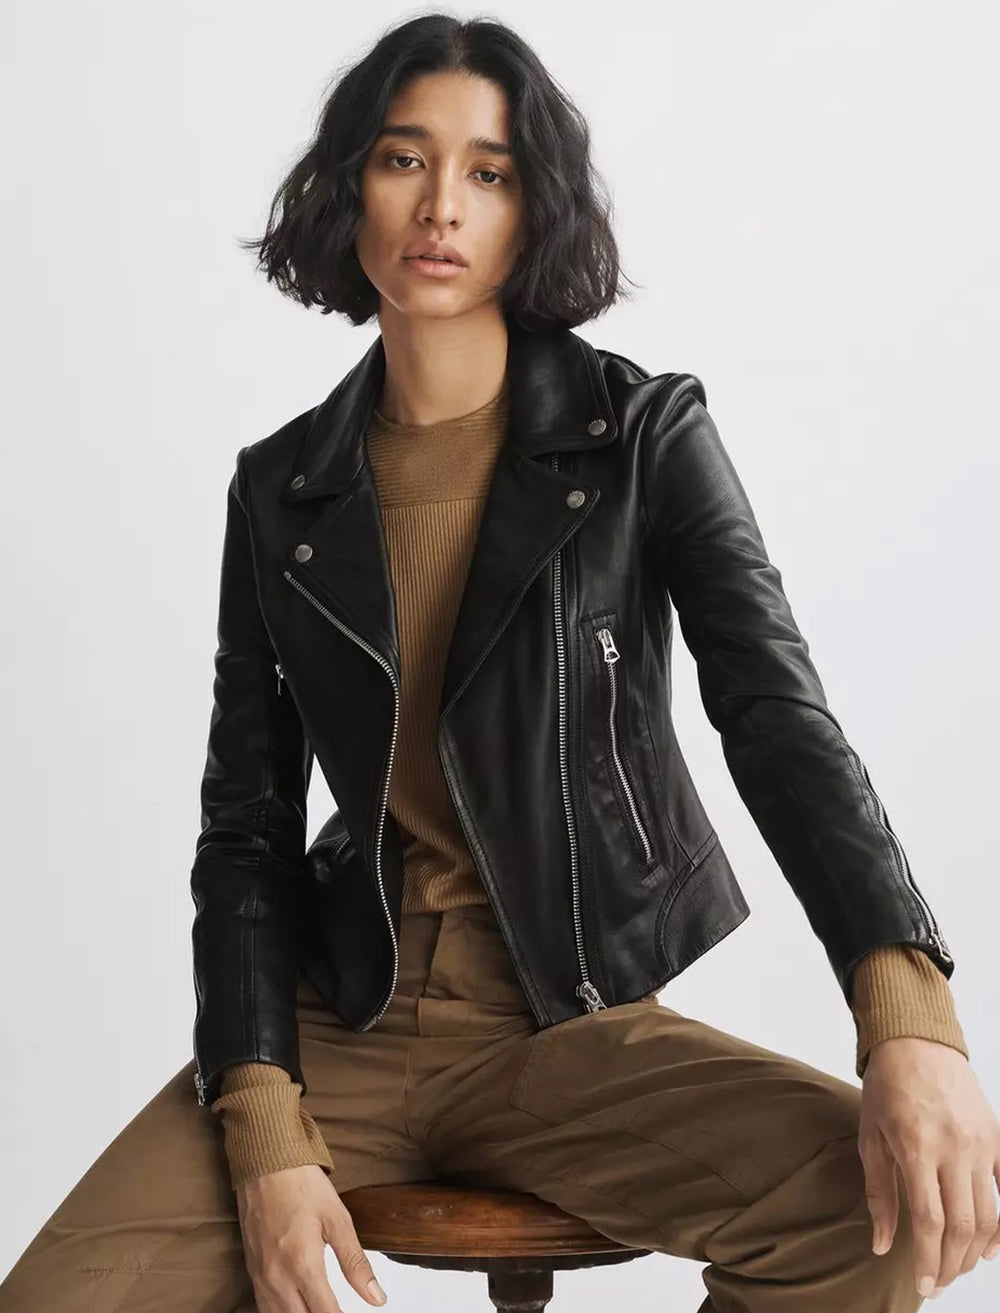 Model wearing Rag & Bone's mack jacket in black.